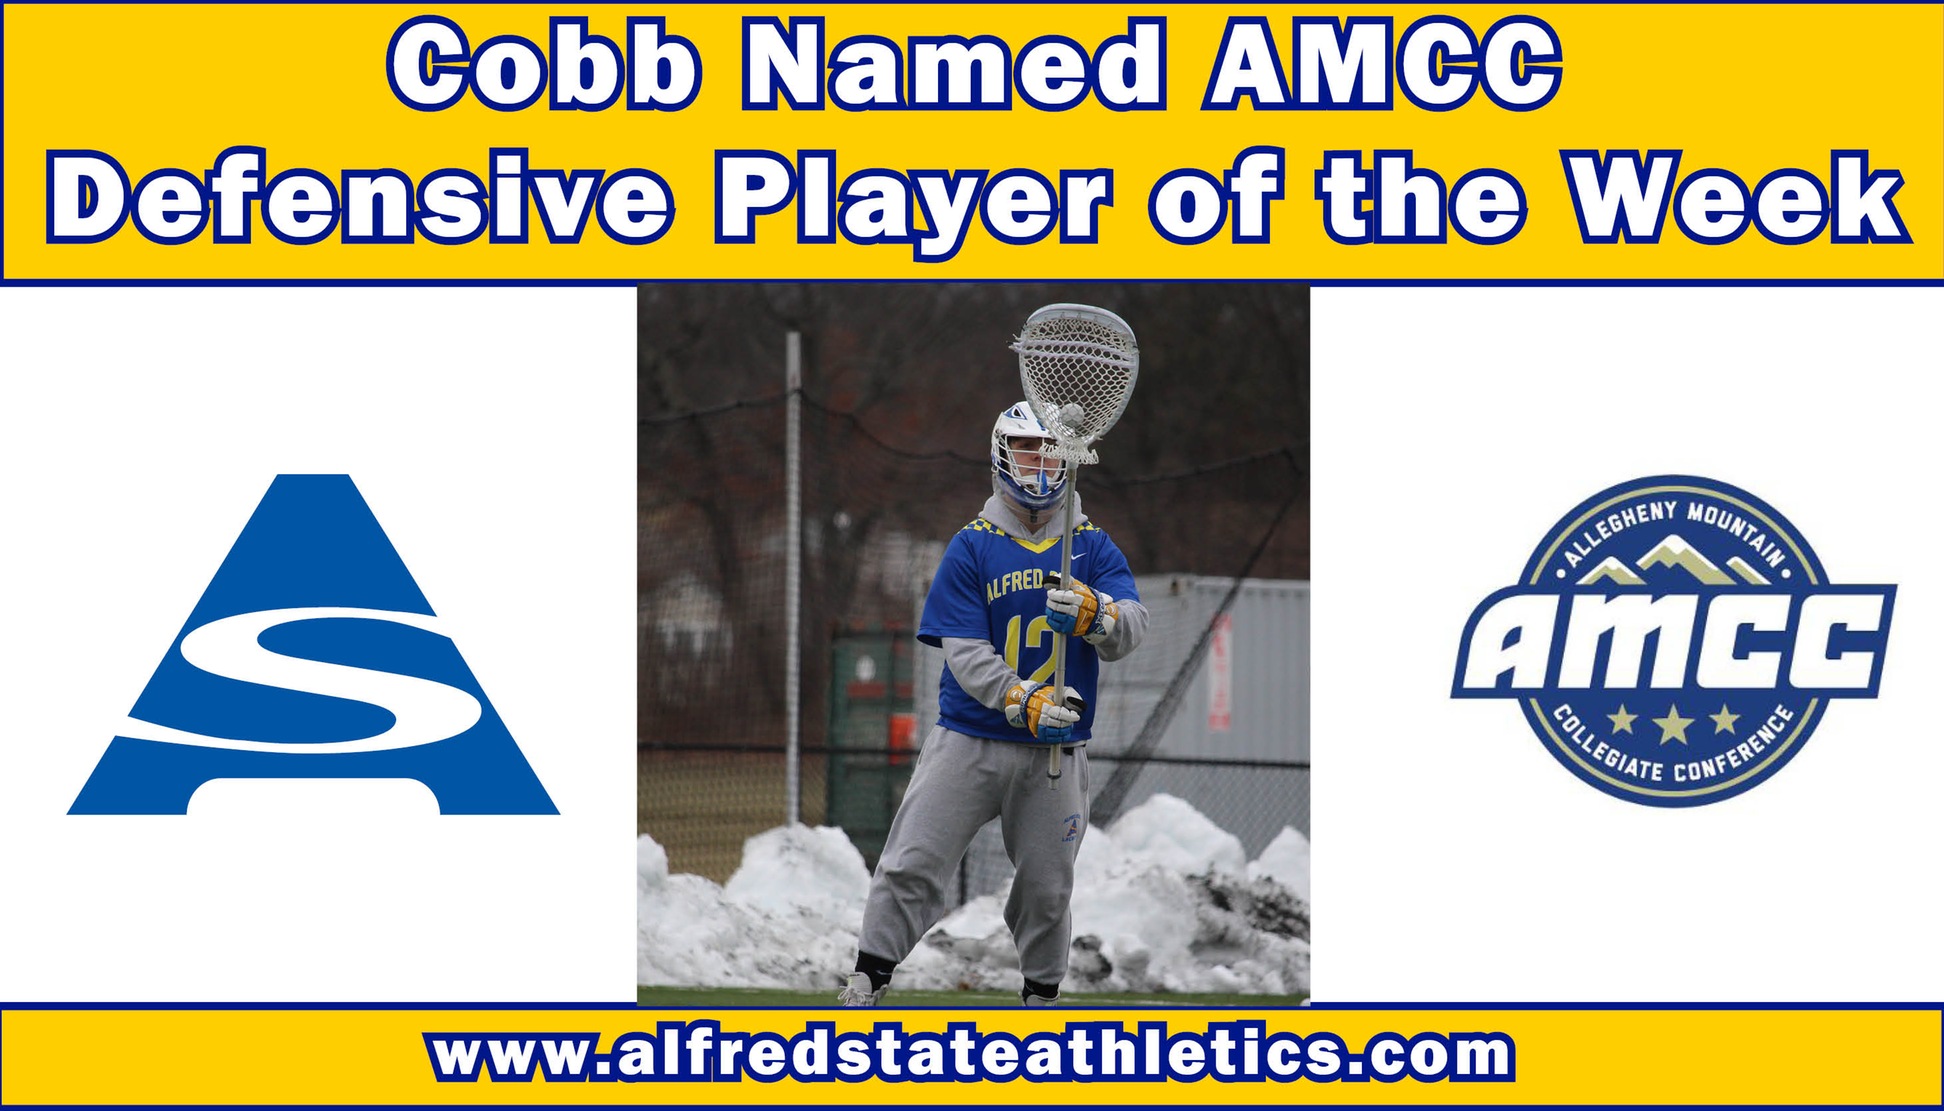 Matt Cobb Named AMCC Defensive Player of the Week